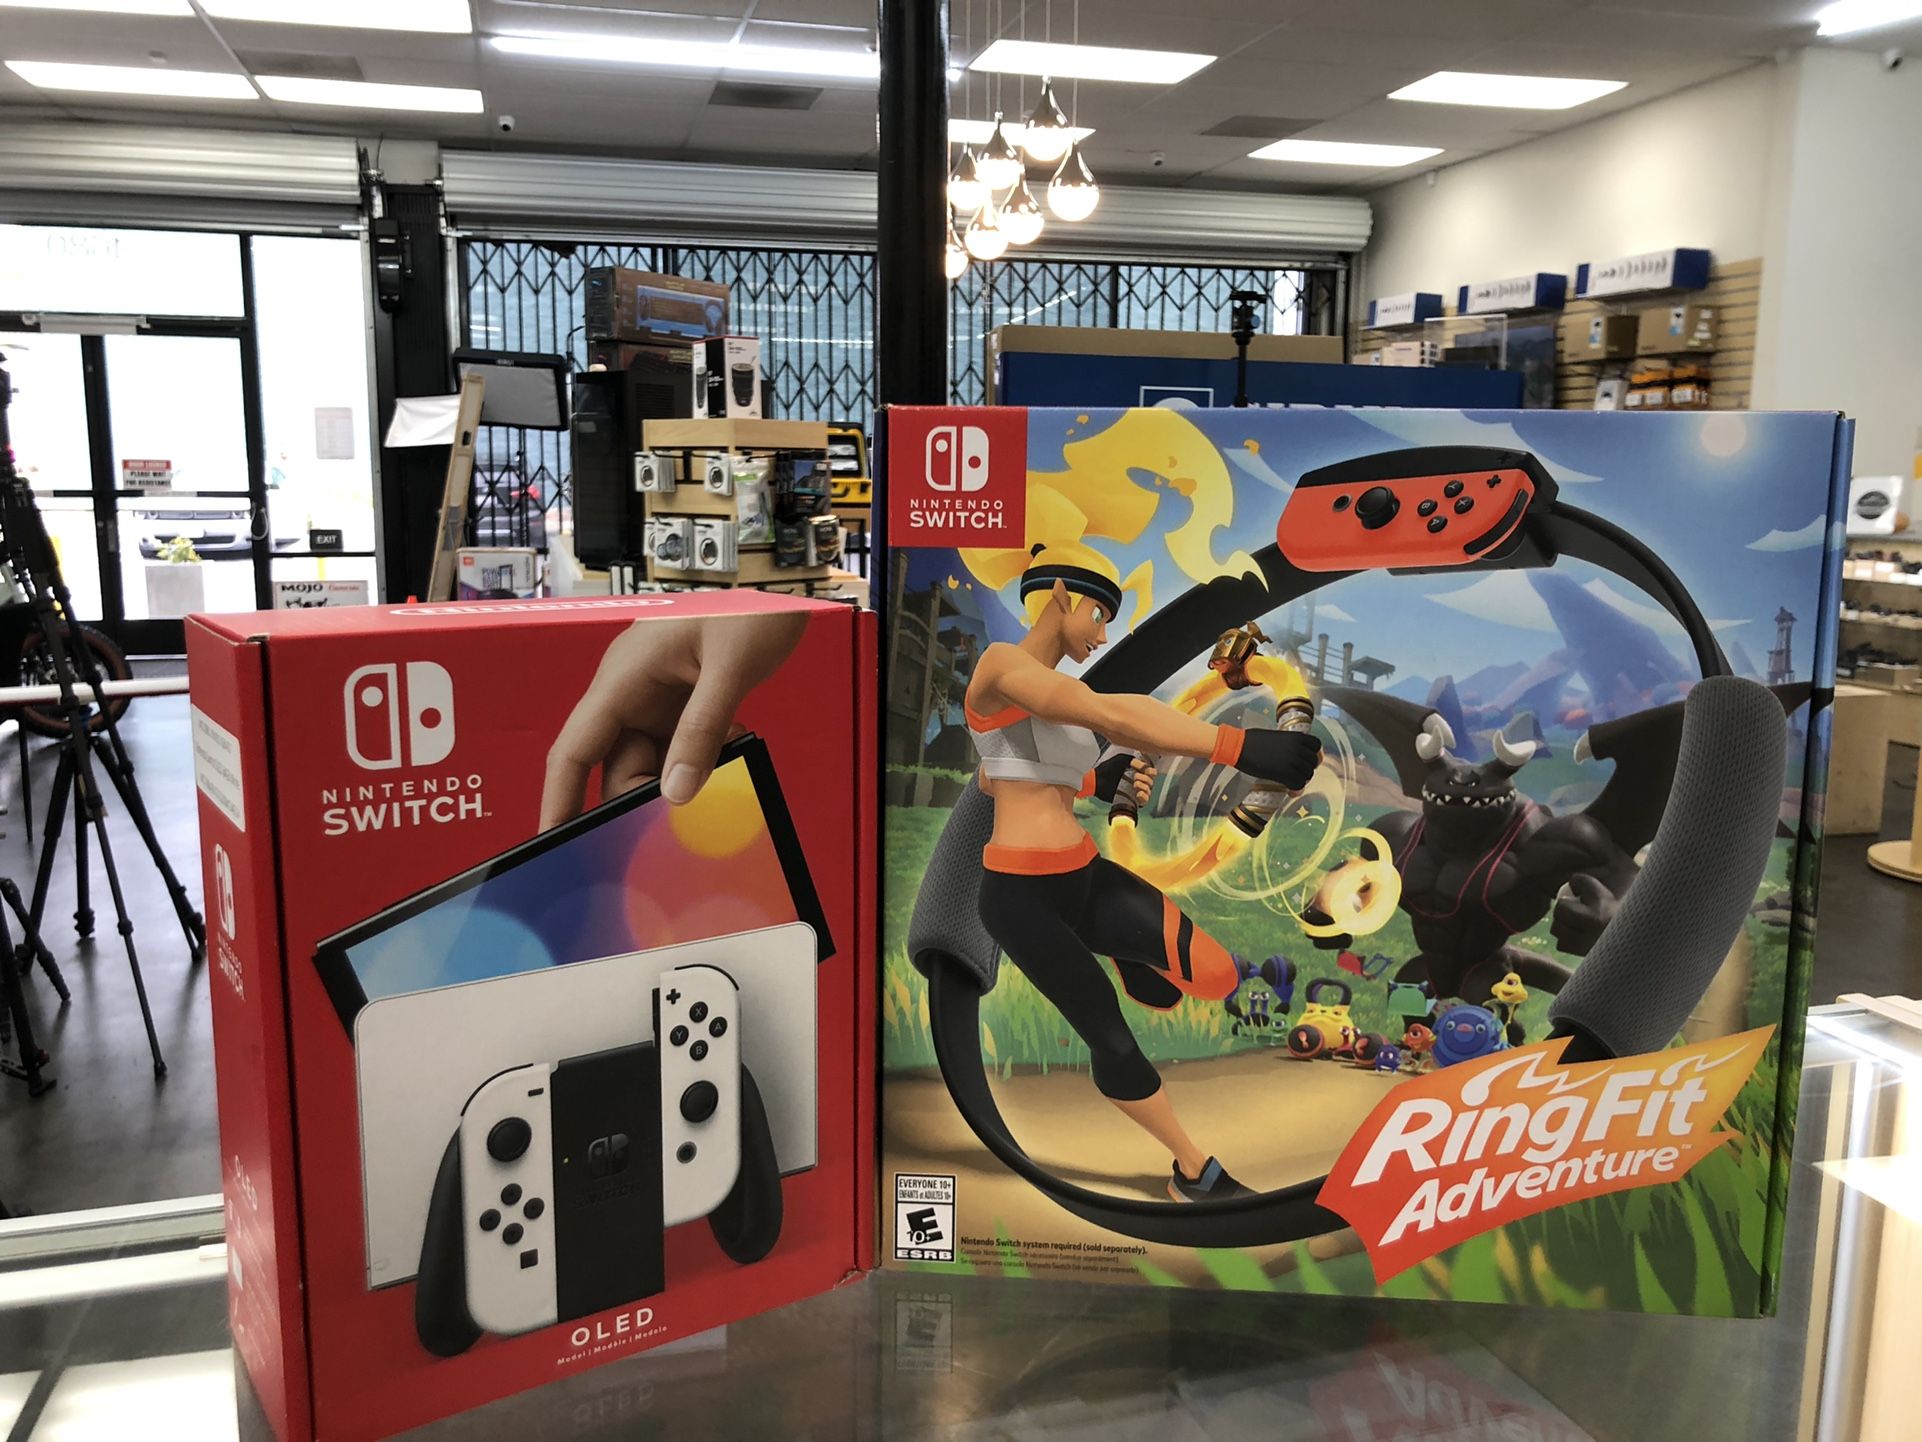 Nintendo Switch OLED + RingFit Adventure Combo. $50 To Finance It